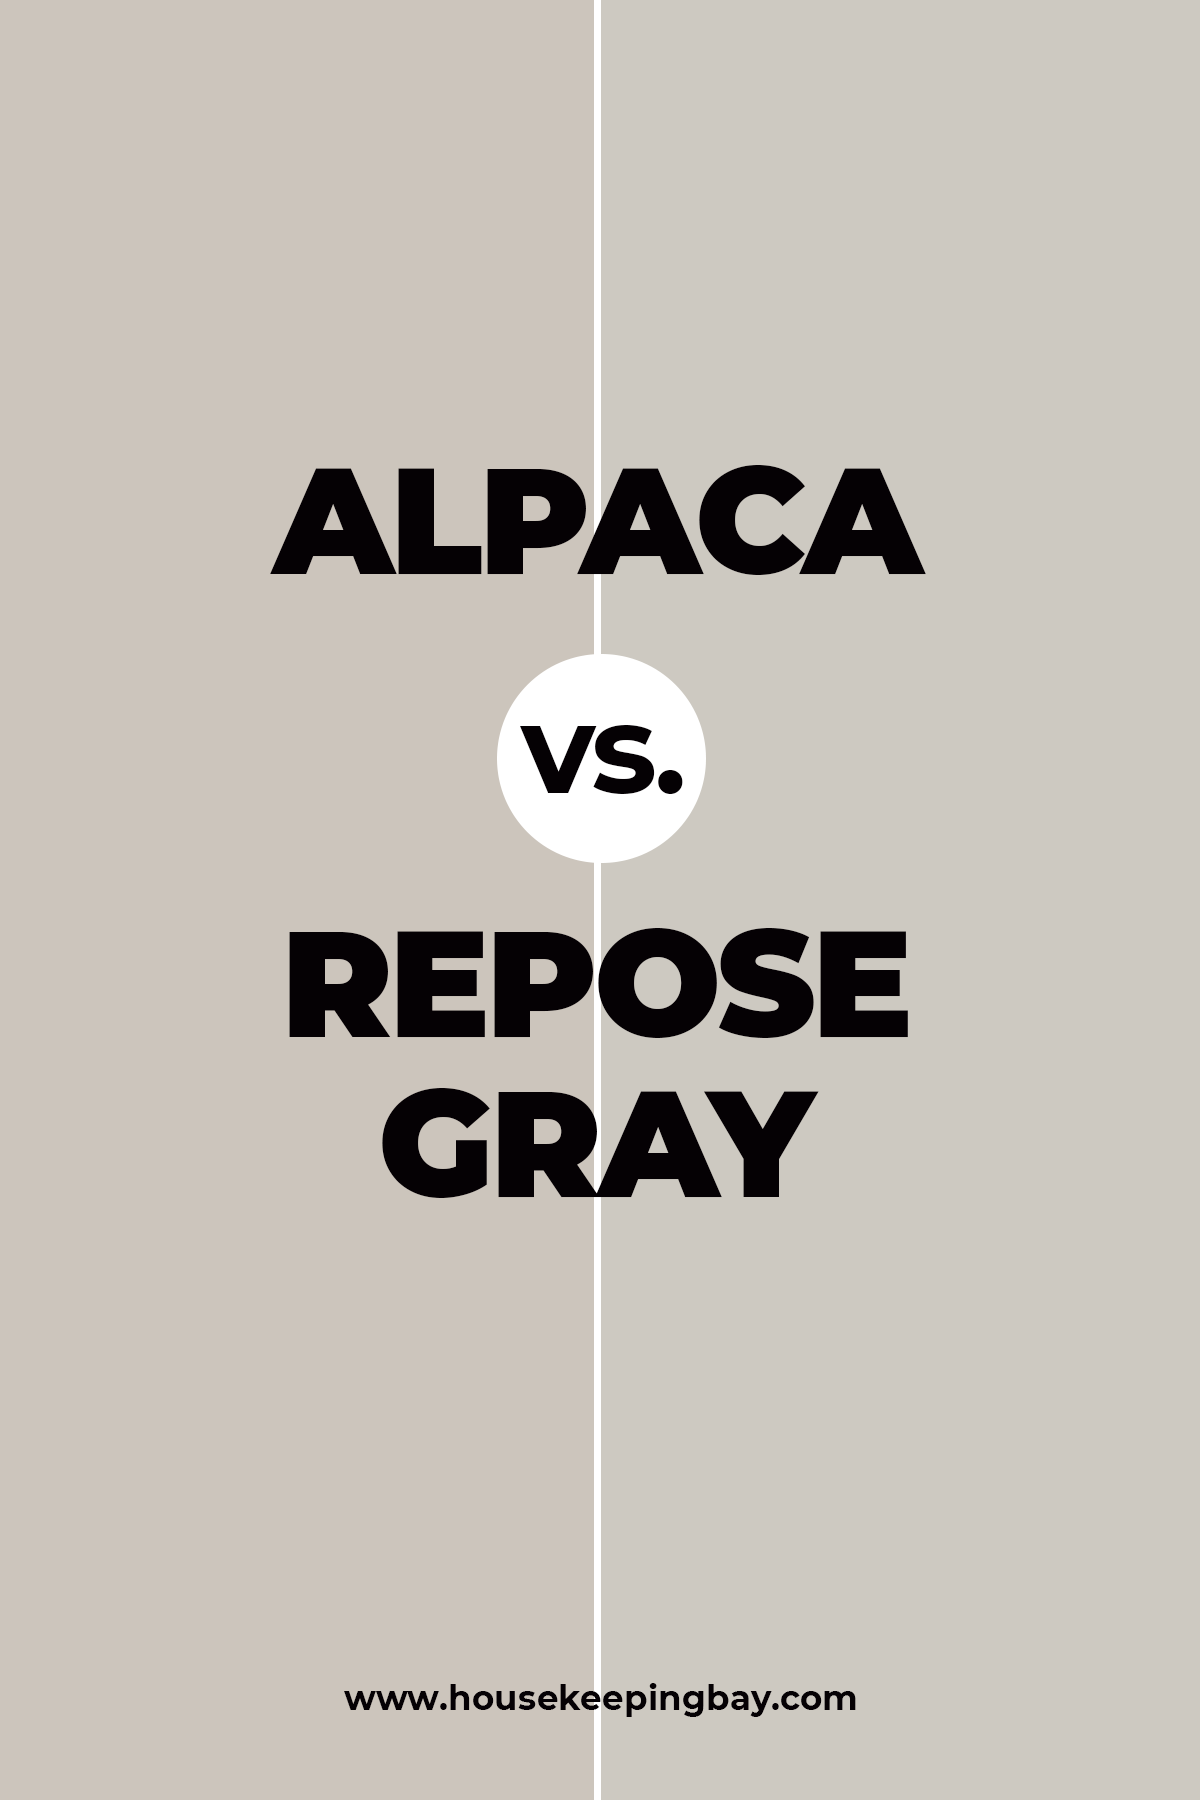 Alpaca vs. Repose Gray